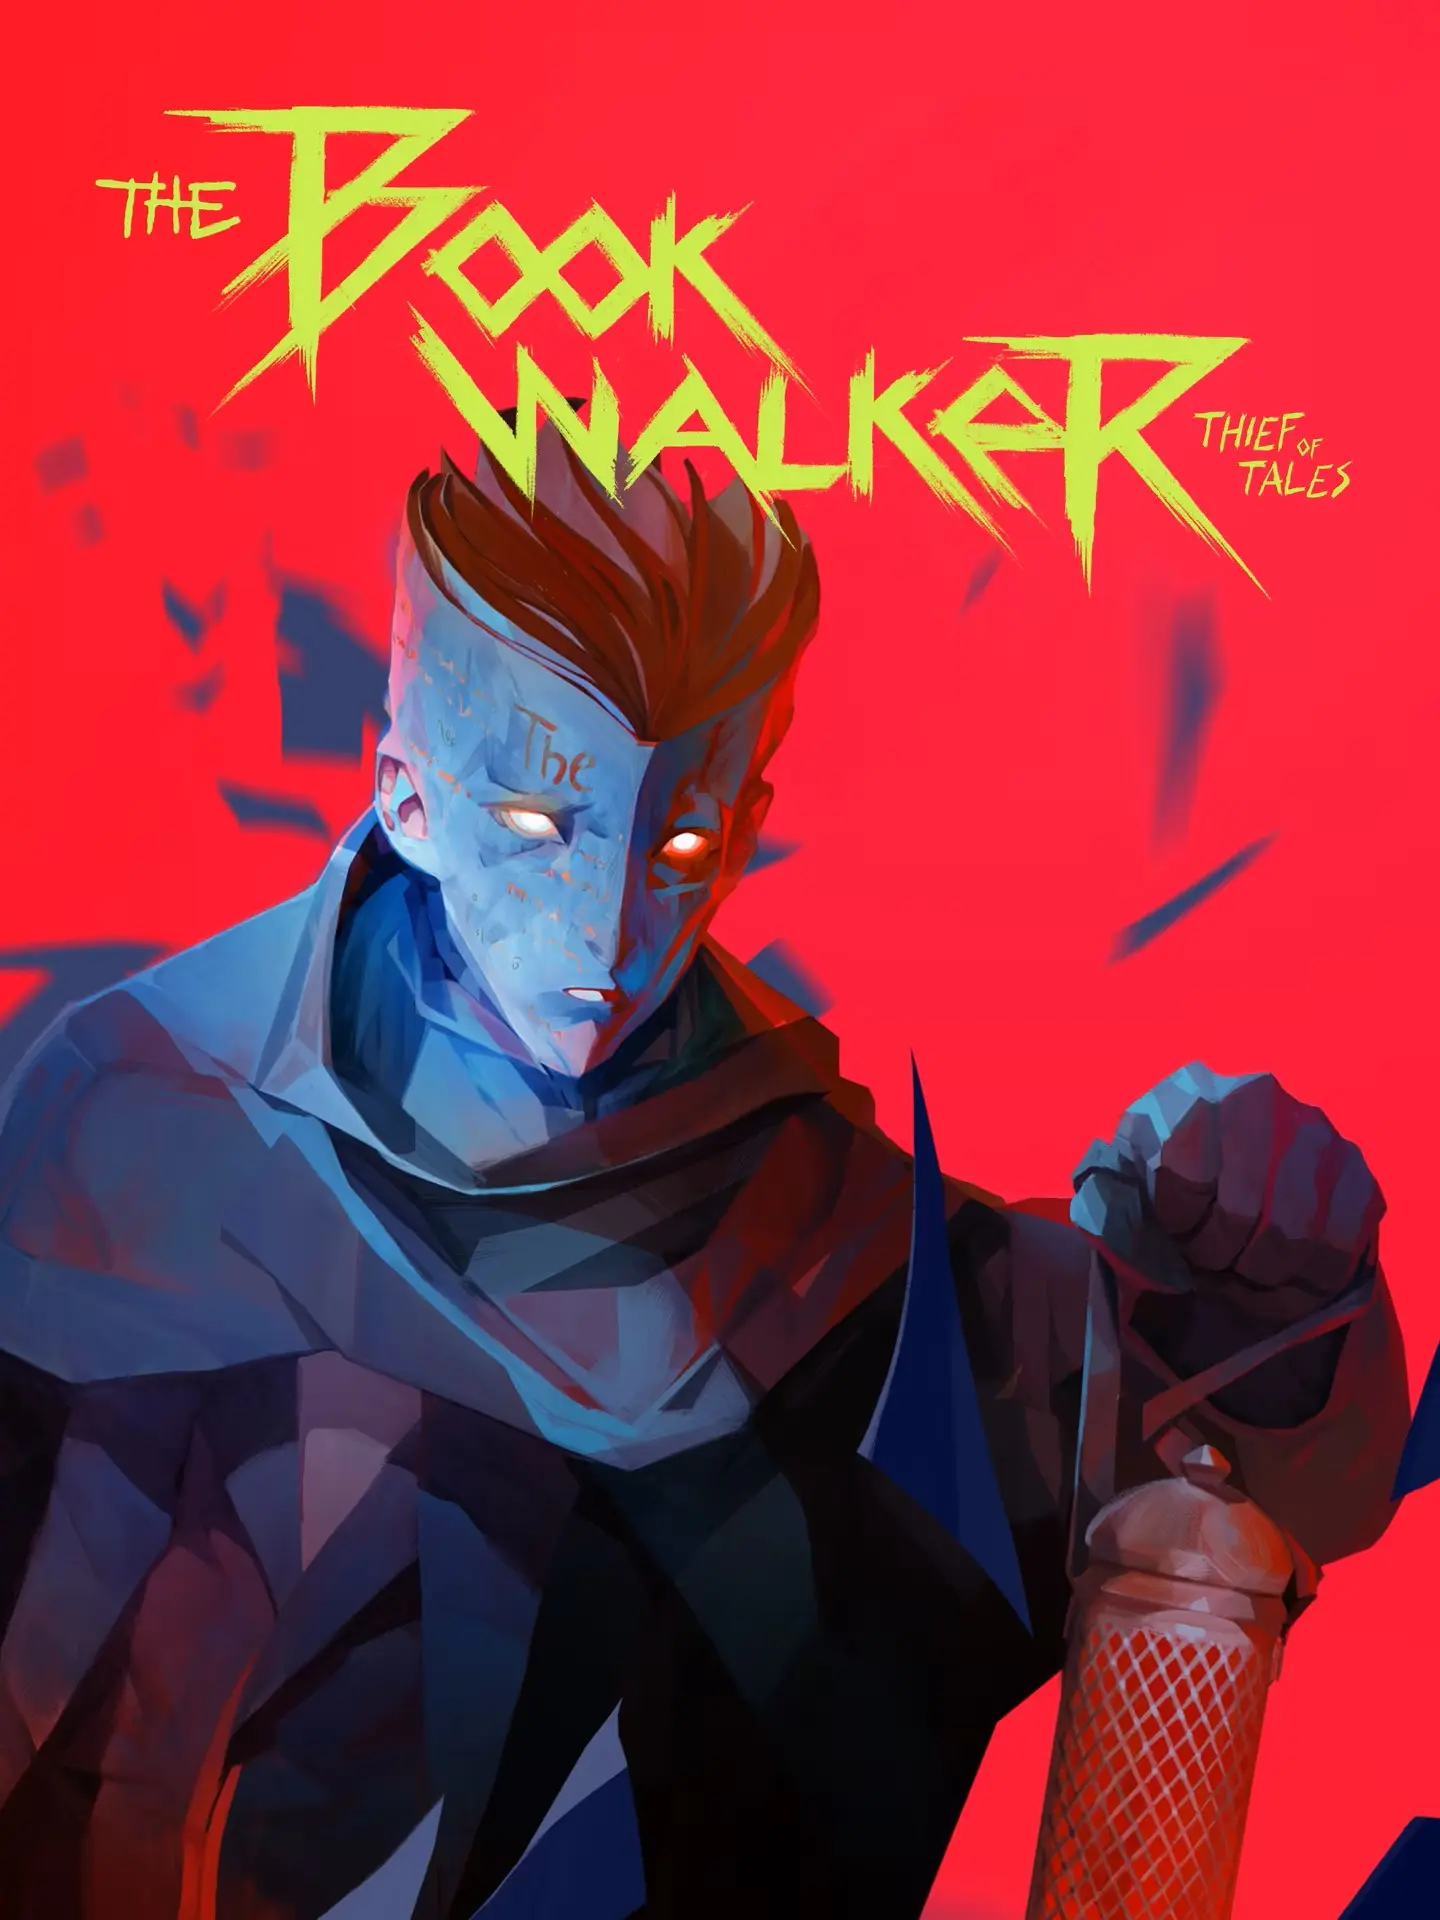 The Bookwalker: Thief of Tales (PC) - Steam - Digital Code